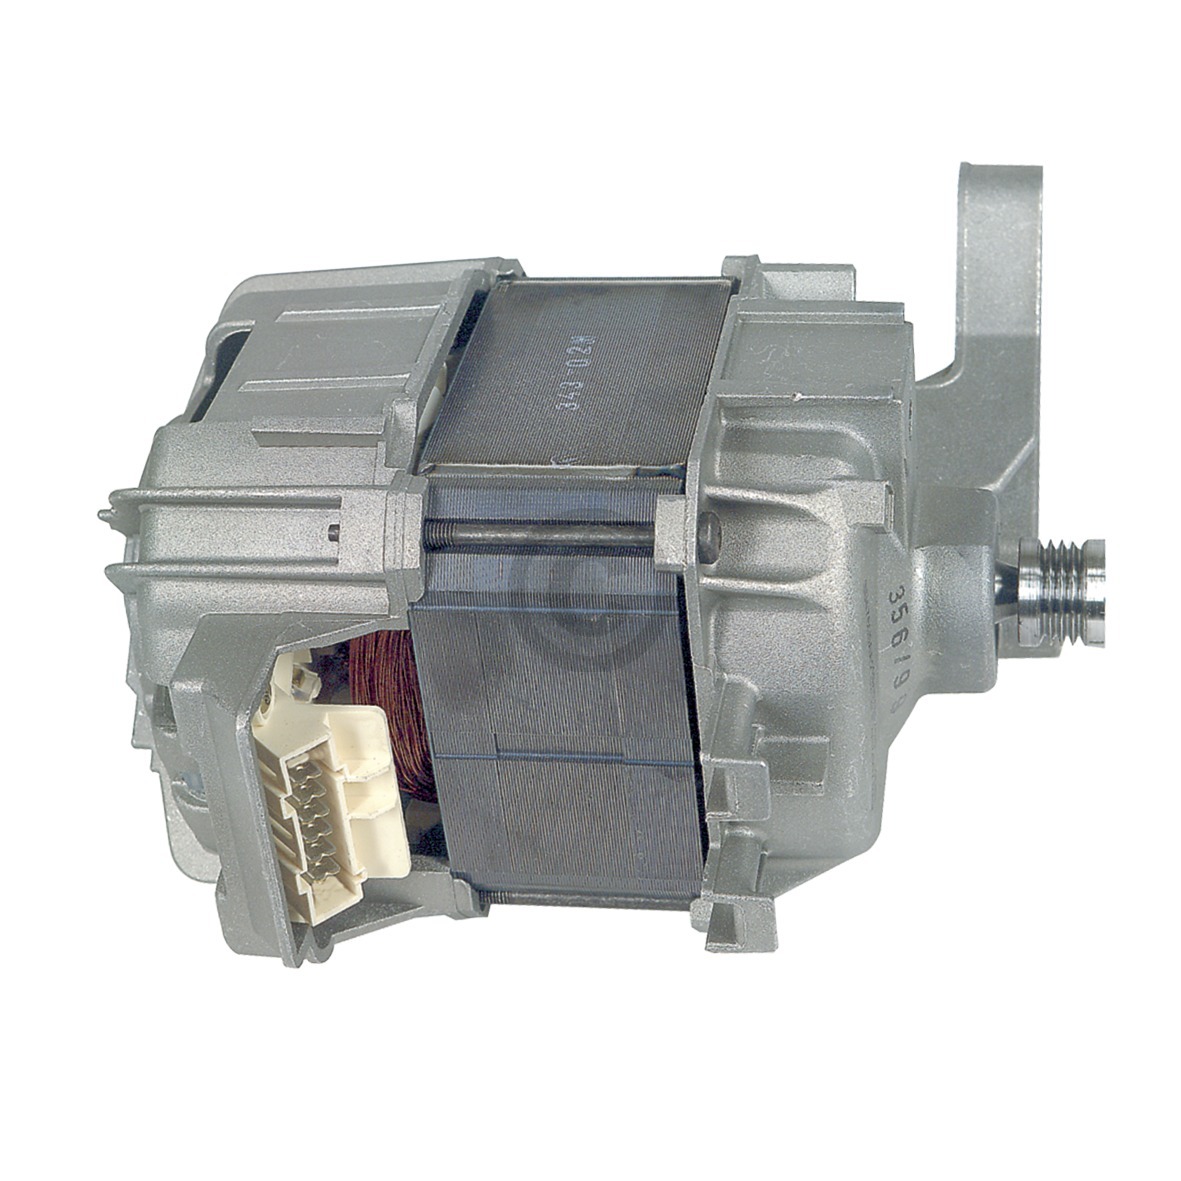 Original Motor 6 Anschlusse Waschmaschine Bosch Siemens 00140864